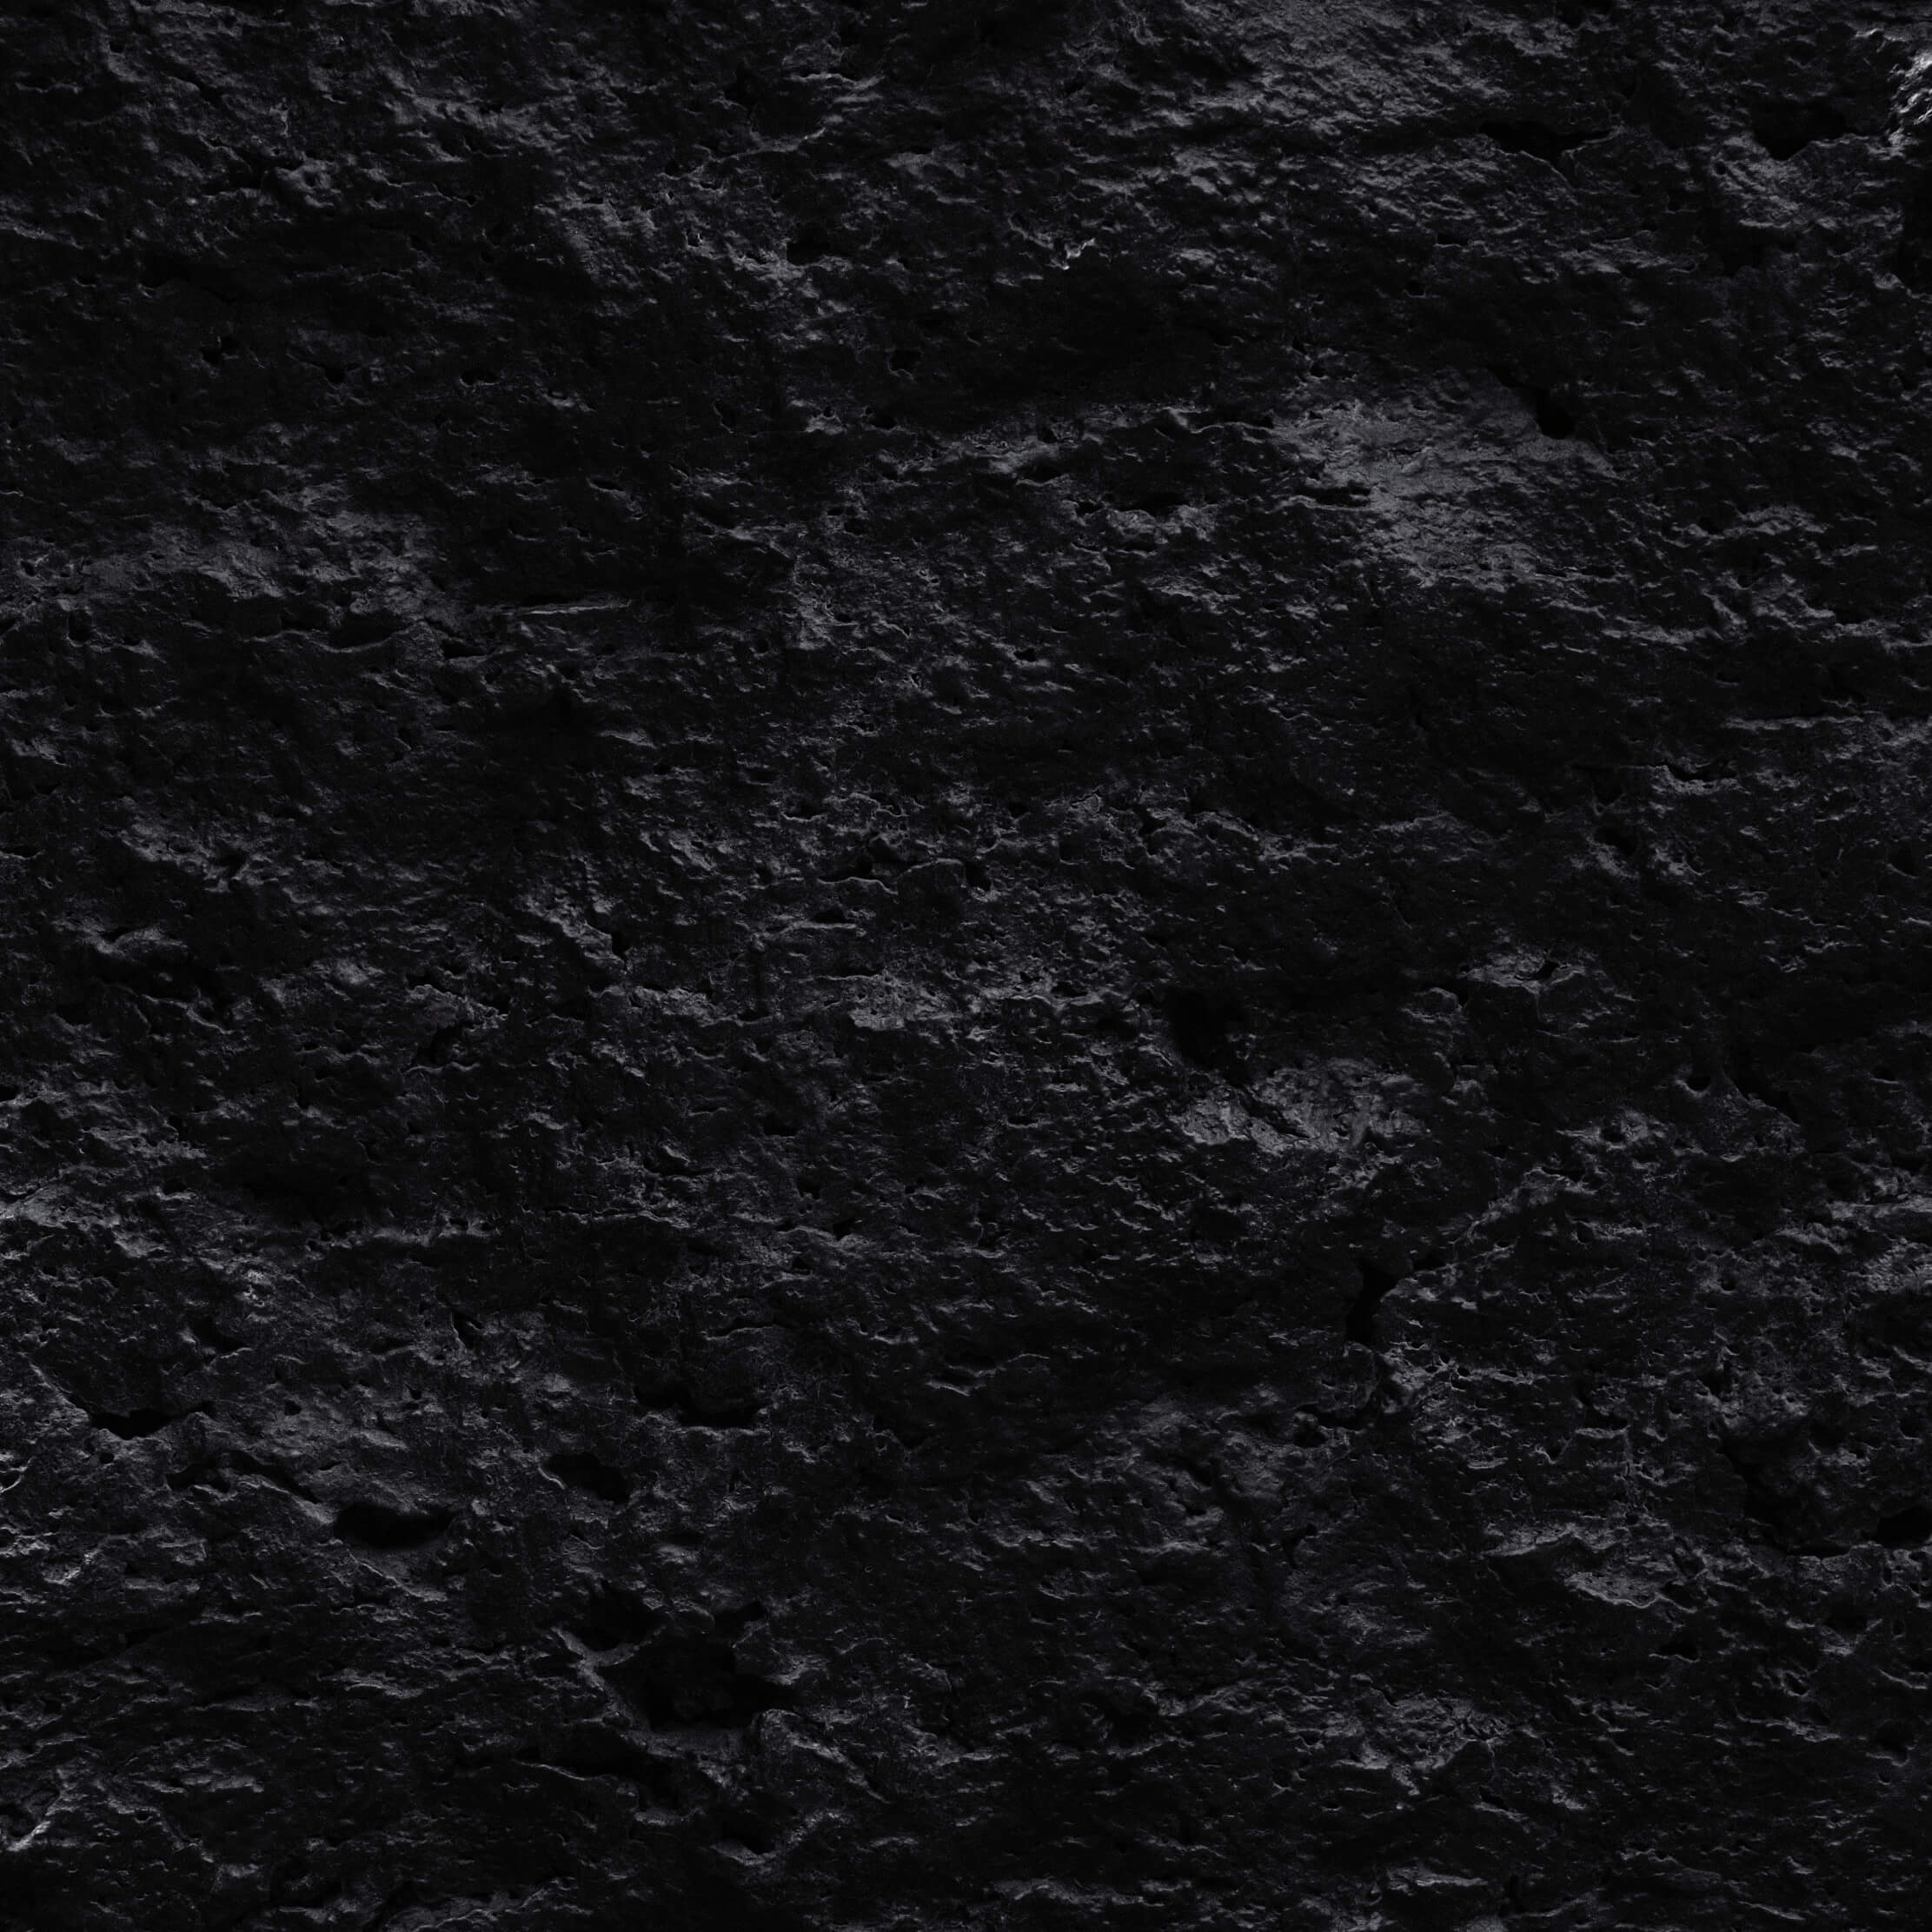 HD Black Backgrounds & Black Images - Download for Free